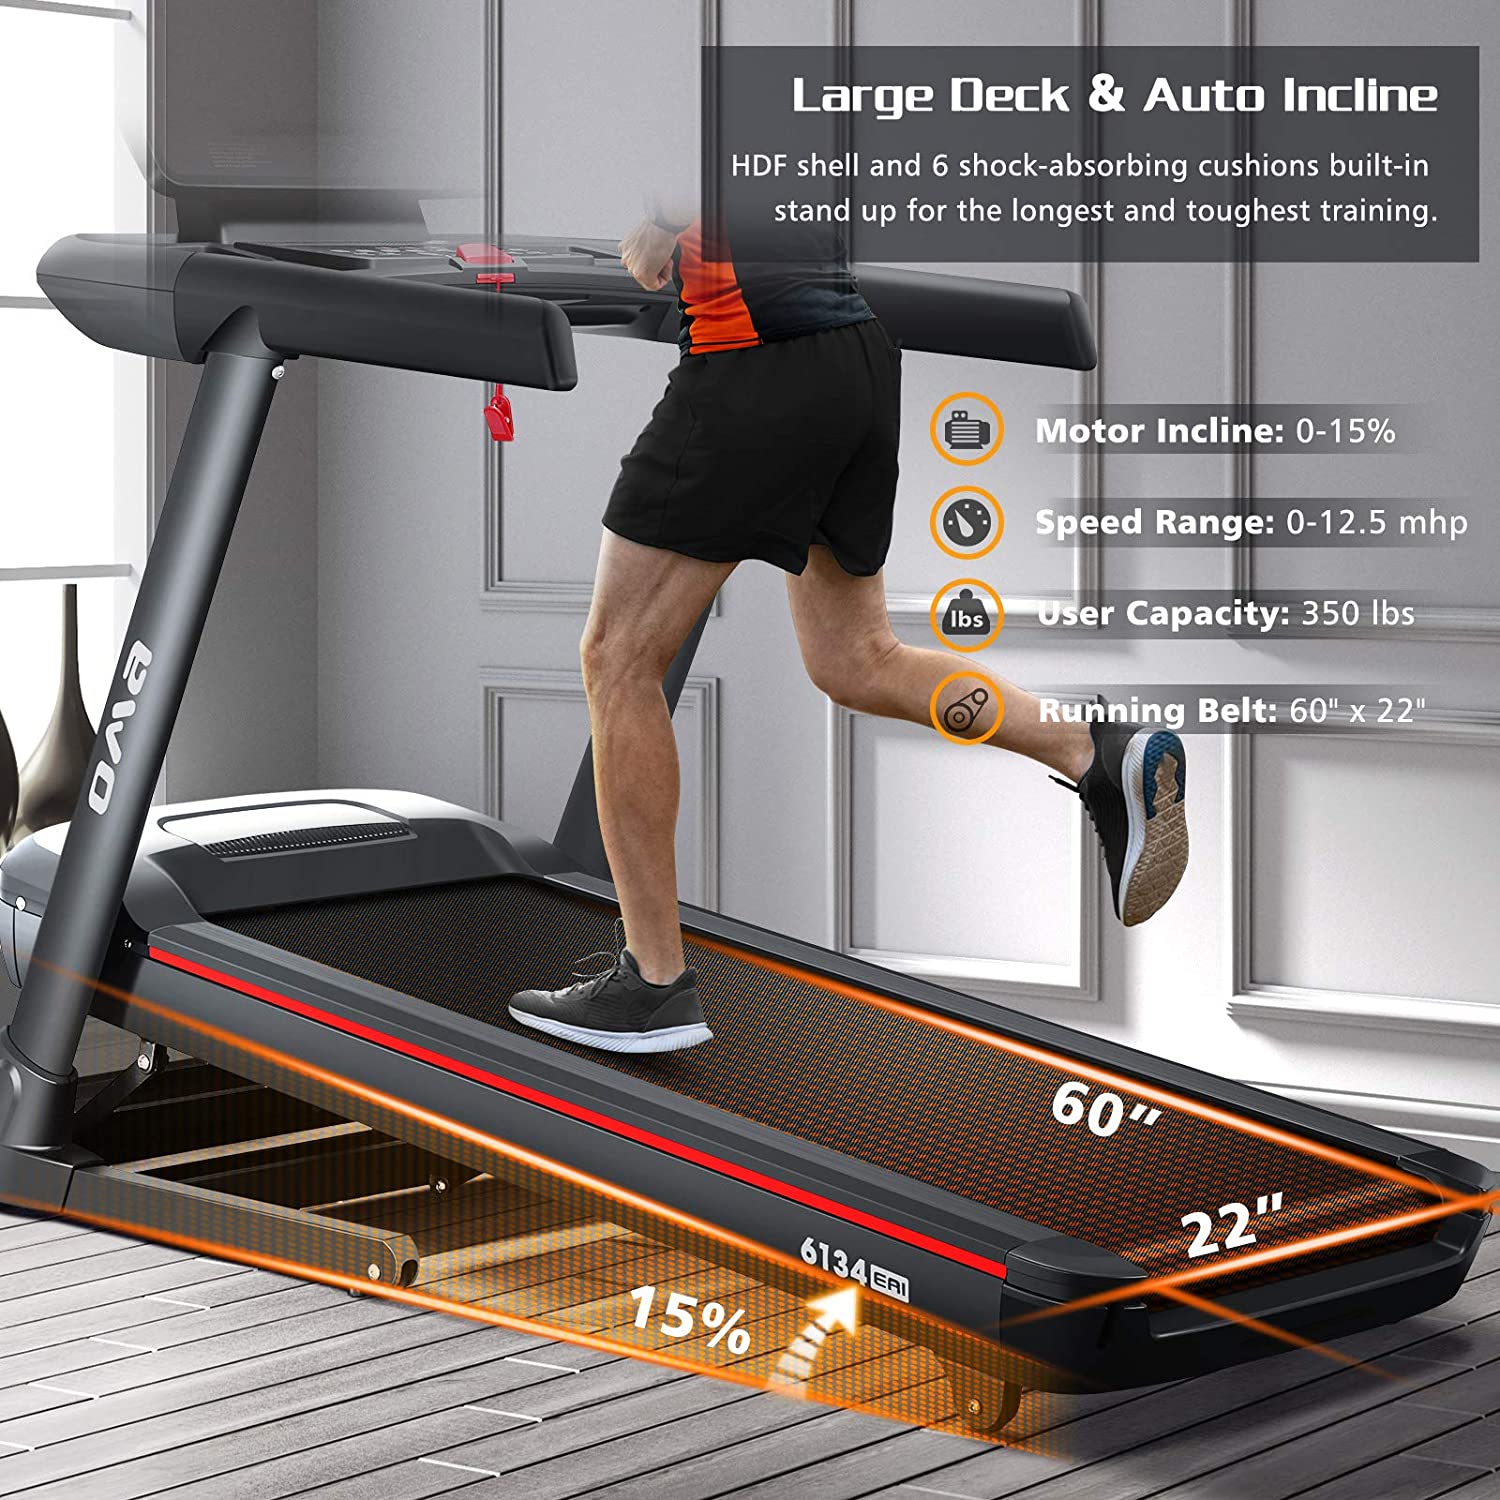 OMA Treadmill for Home 6134EAI features